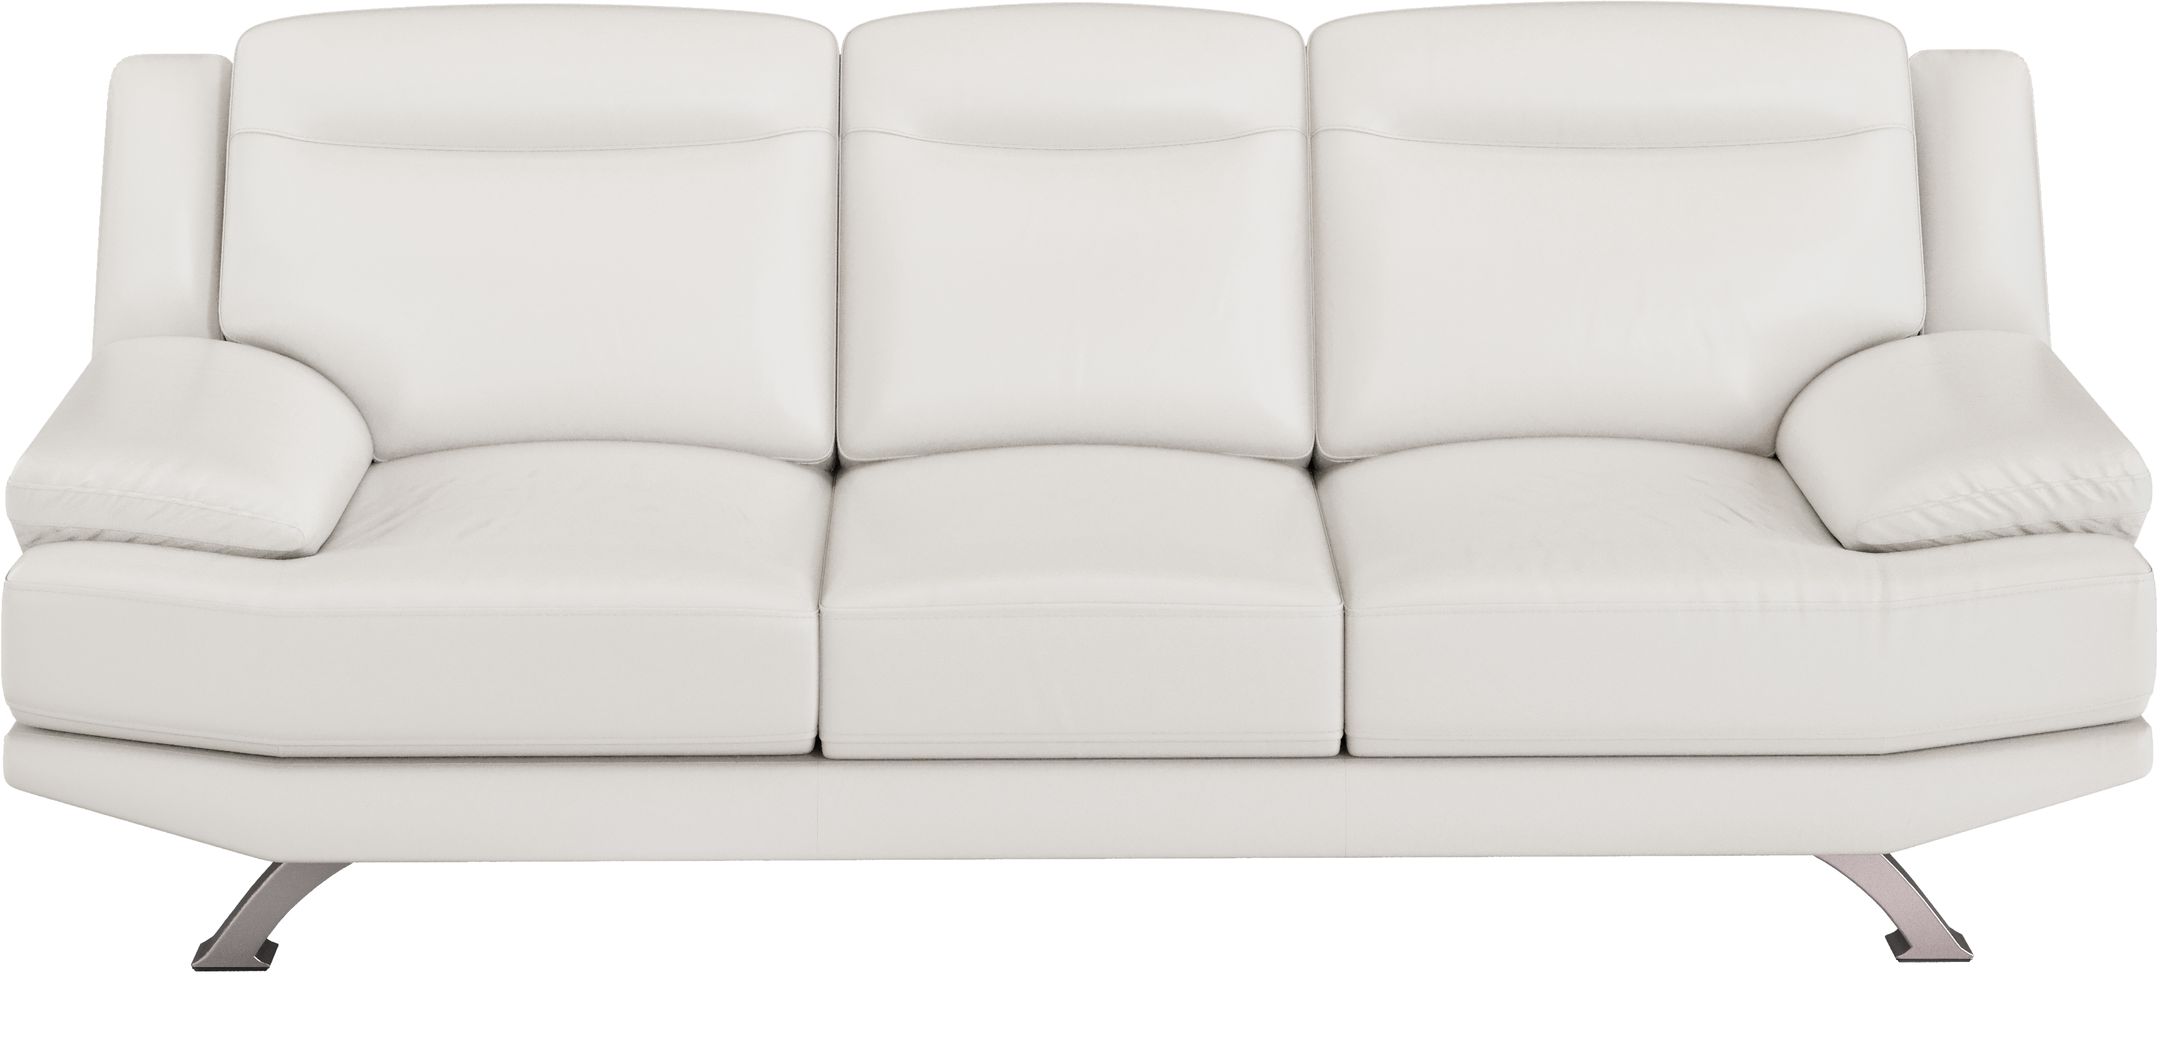 sofia vergara gabriele white leather sofa